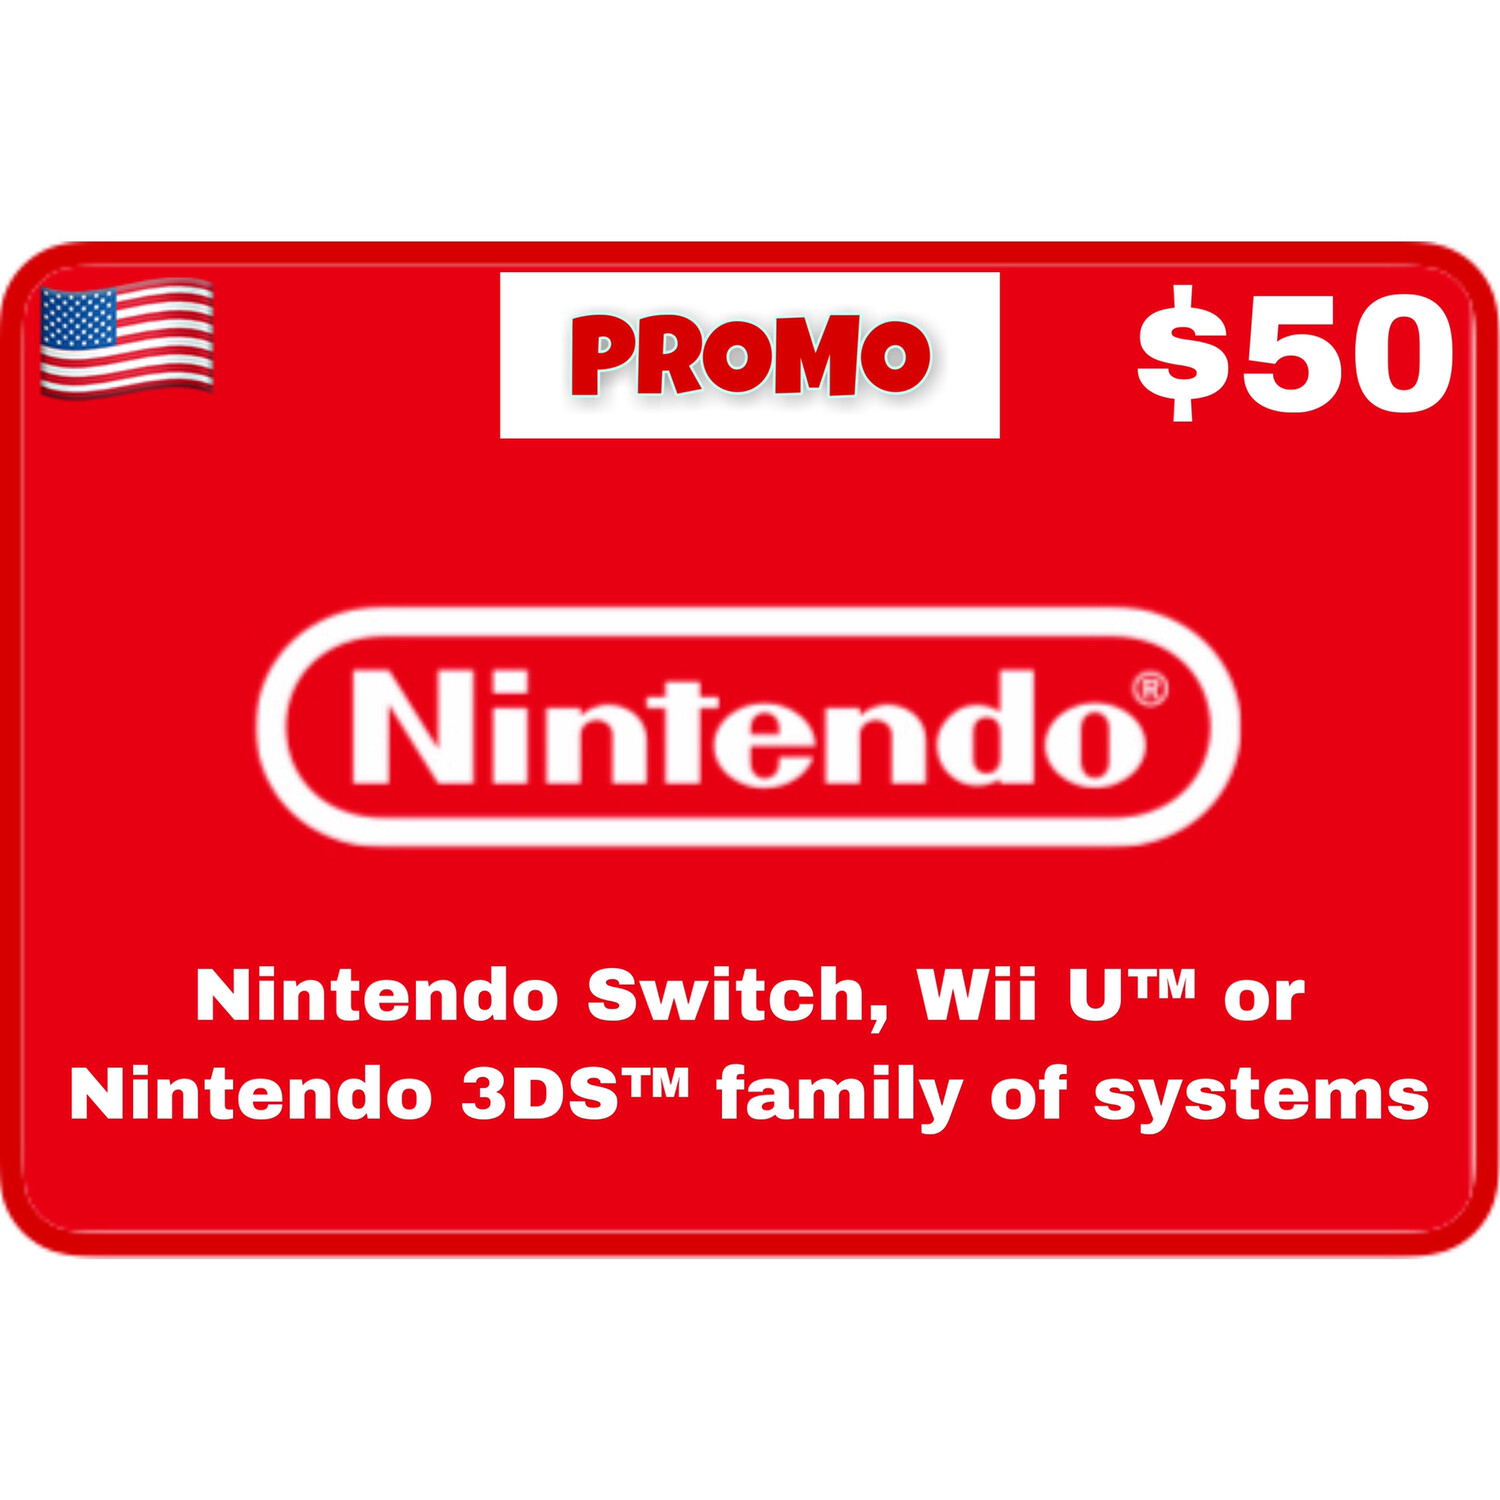 Promo Nintendo eShop USA $50 (Web Order Only)